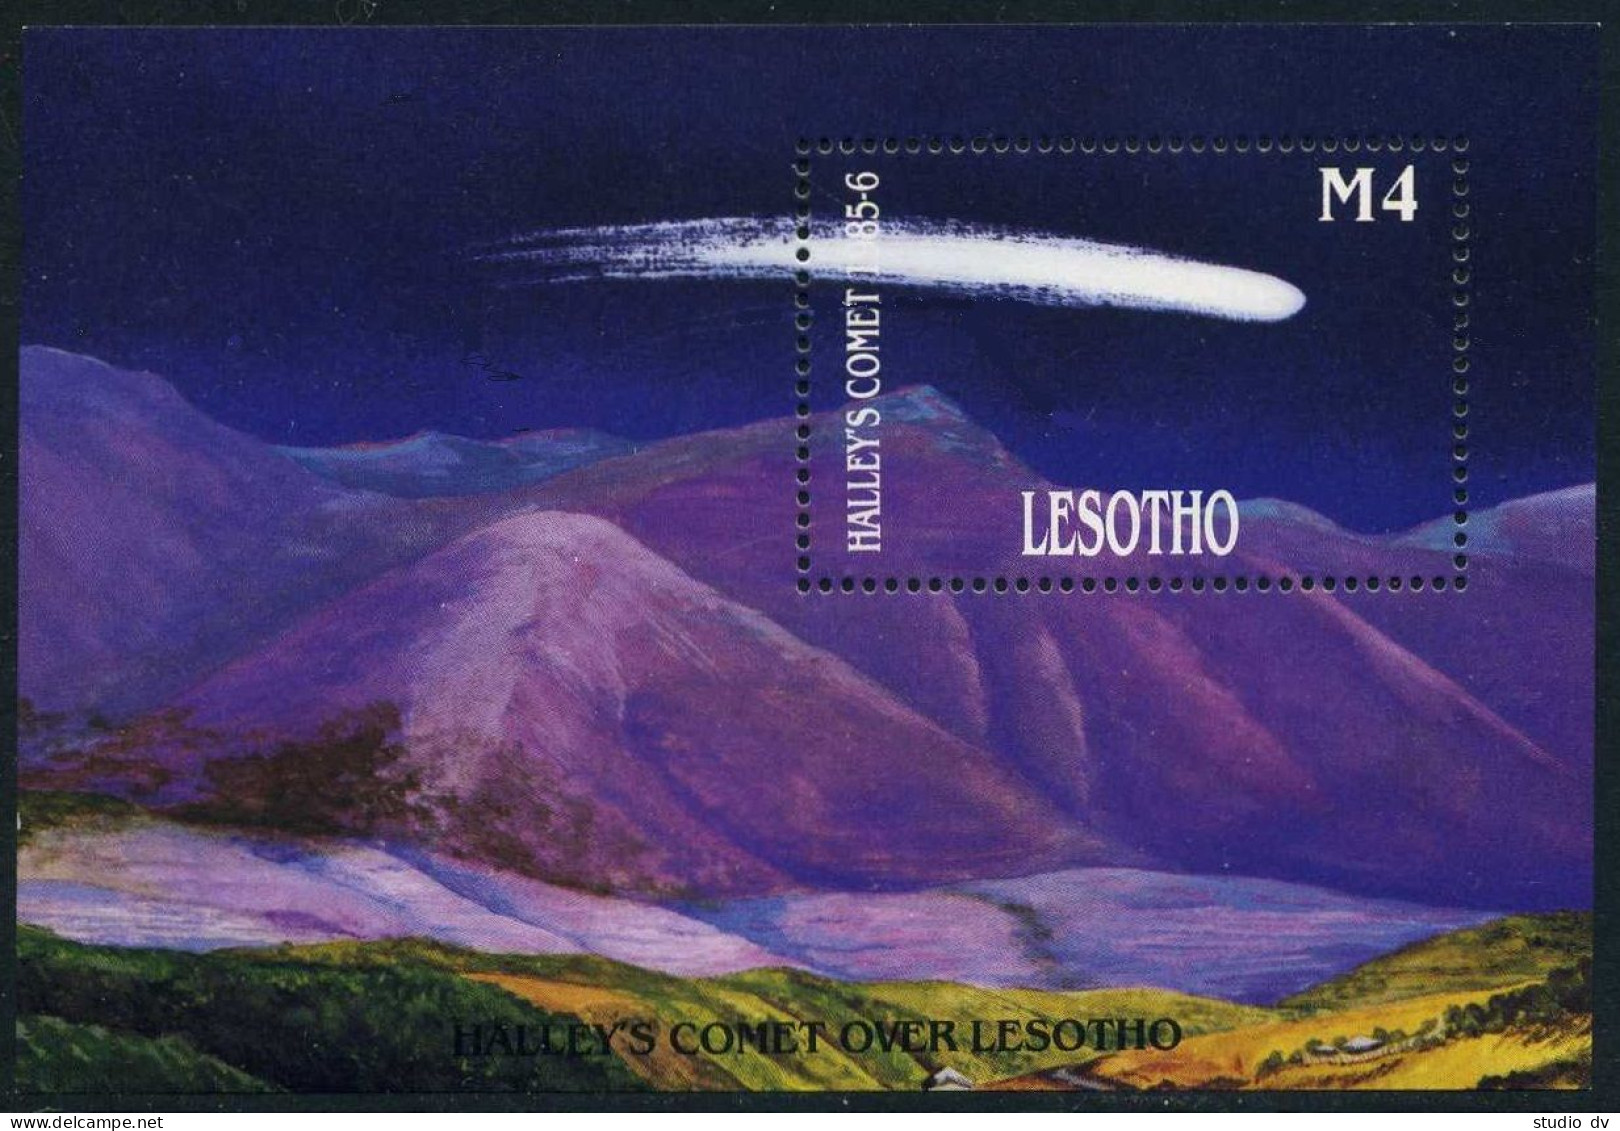 Lesotho 526-529,530,MNH.Michel 570-574 Bl.32. Halley's Comet,1986. - Lesotho (1966-...)